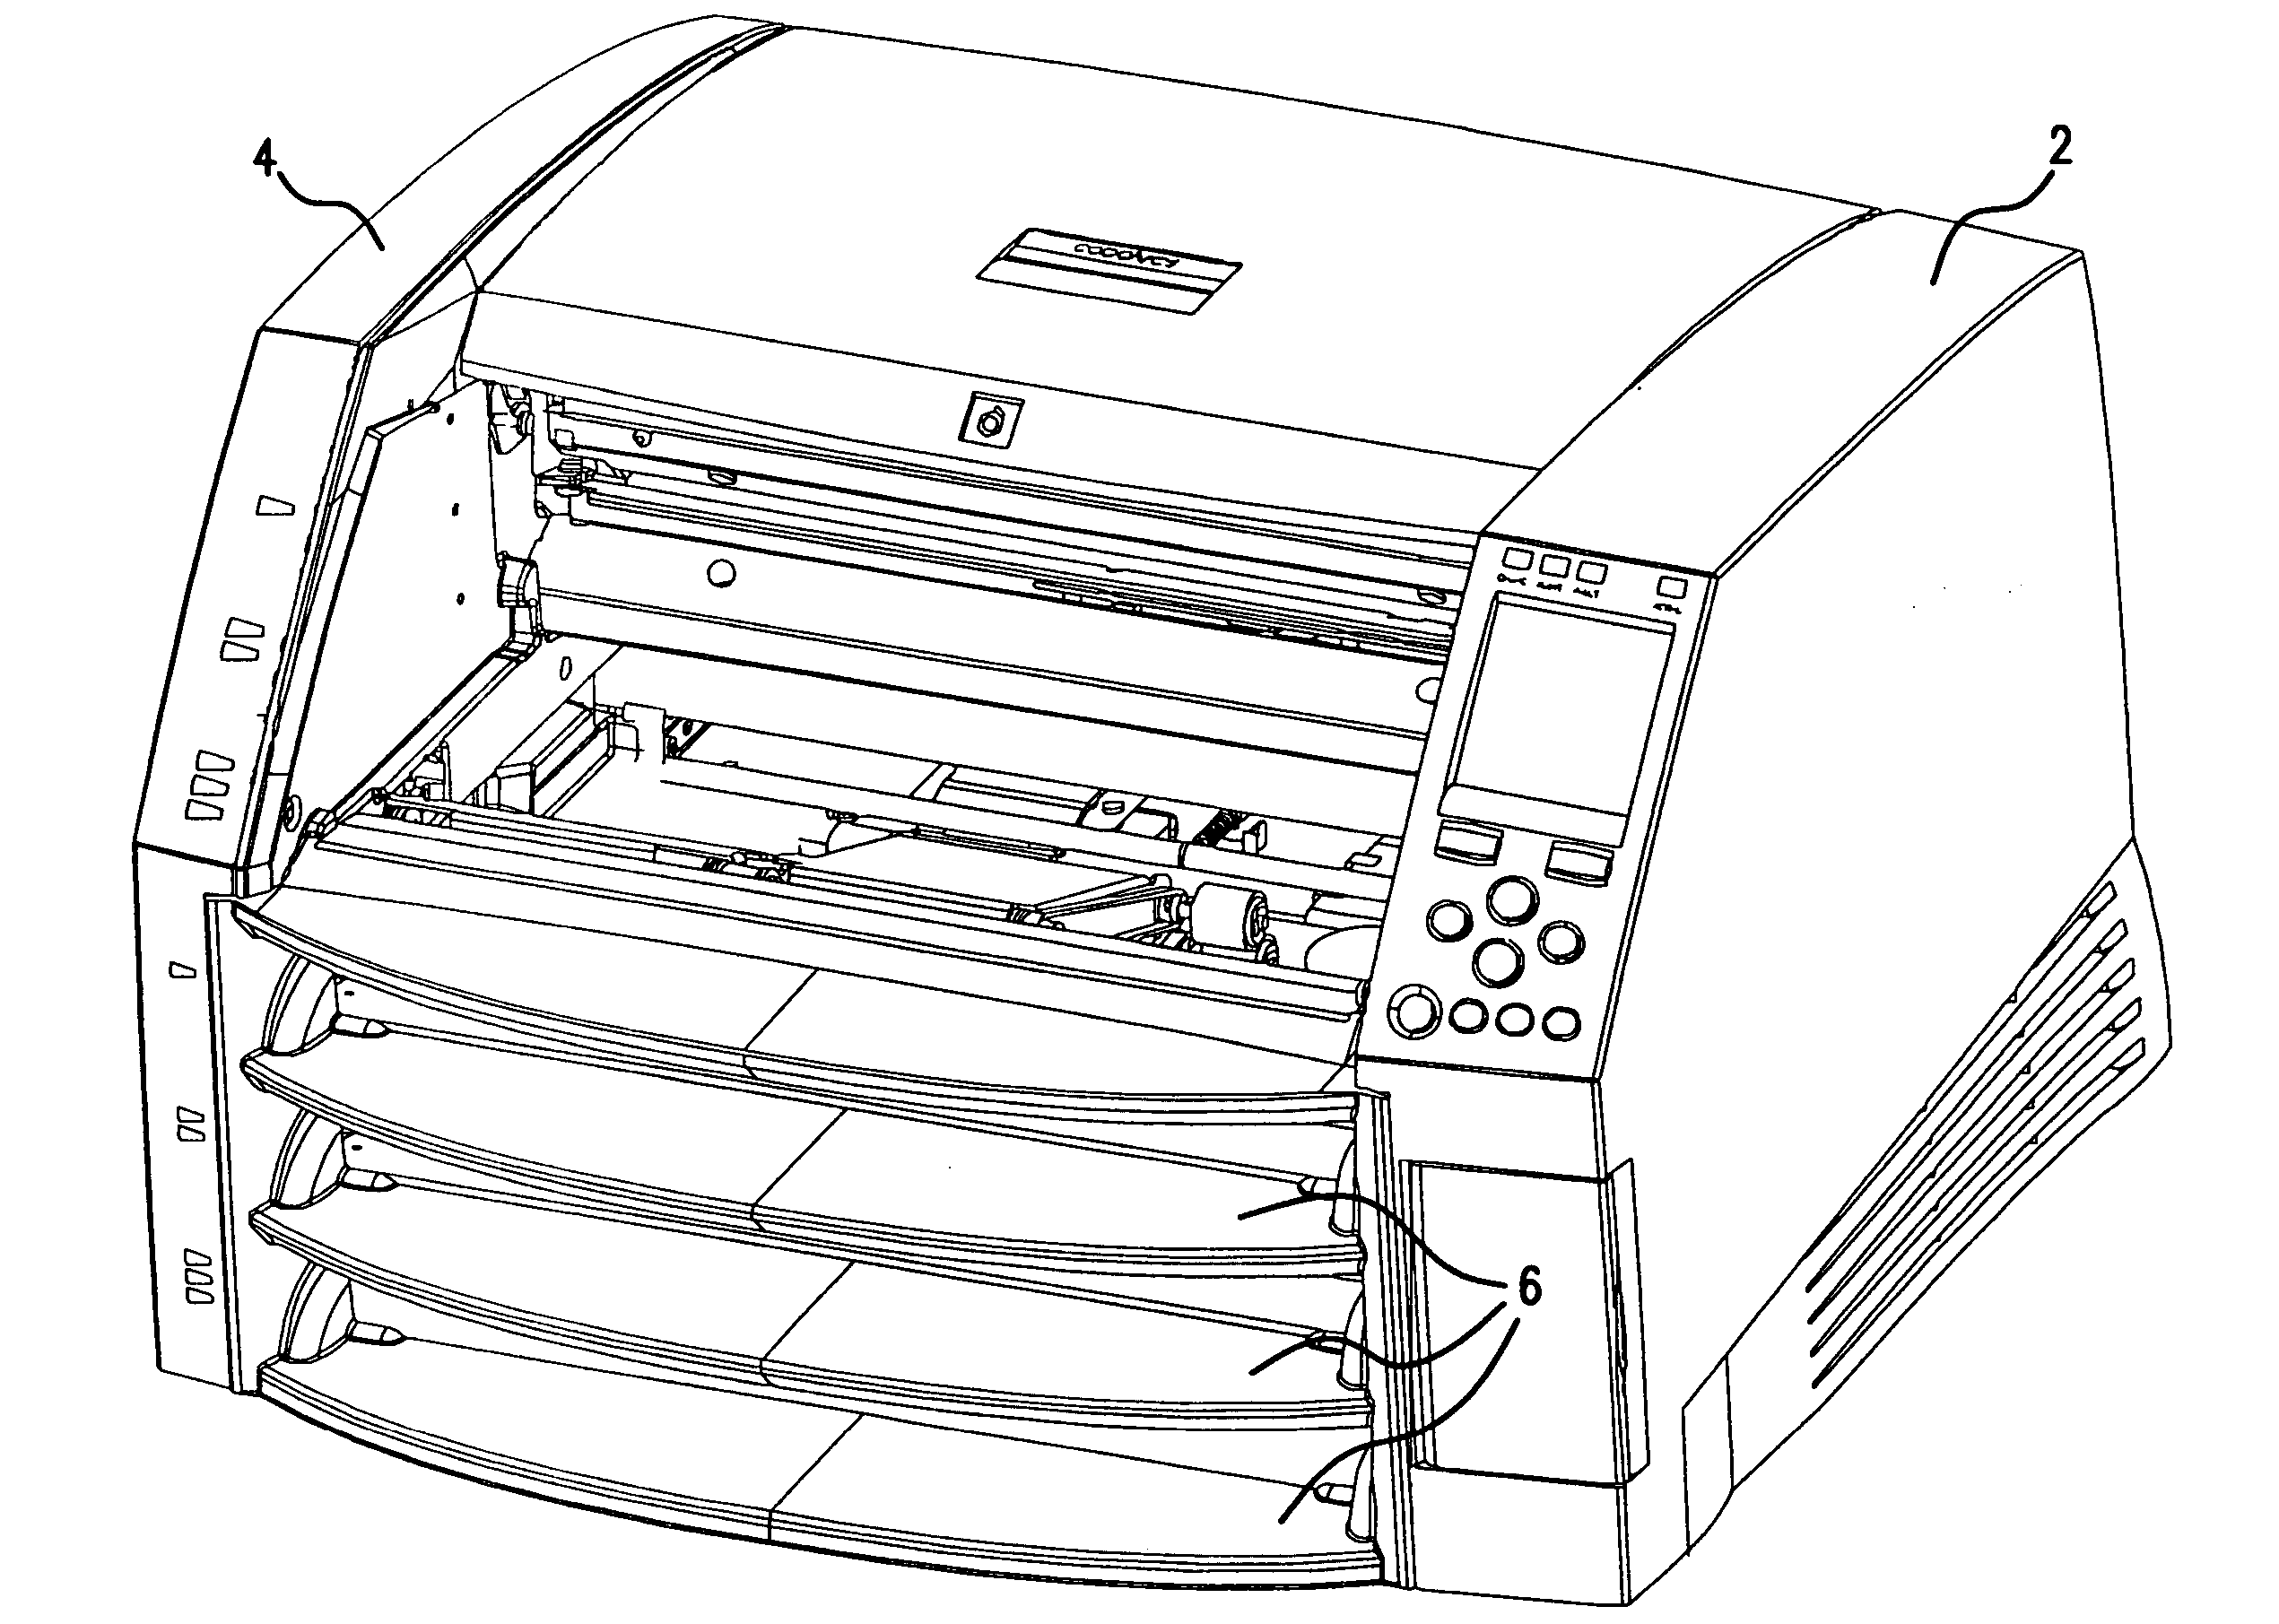 Multi-media printer including paper path sensors